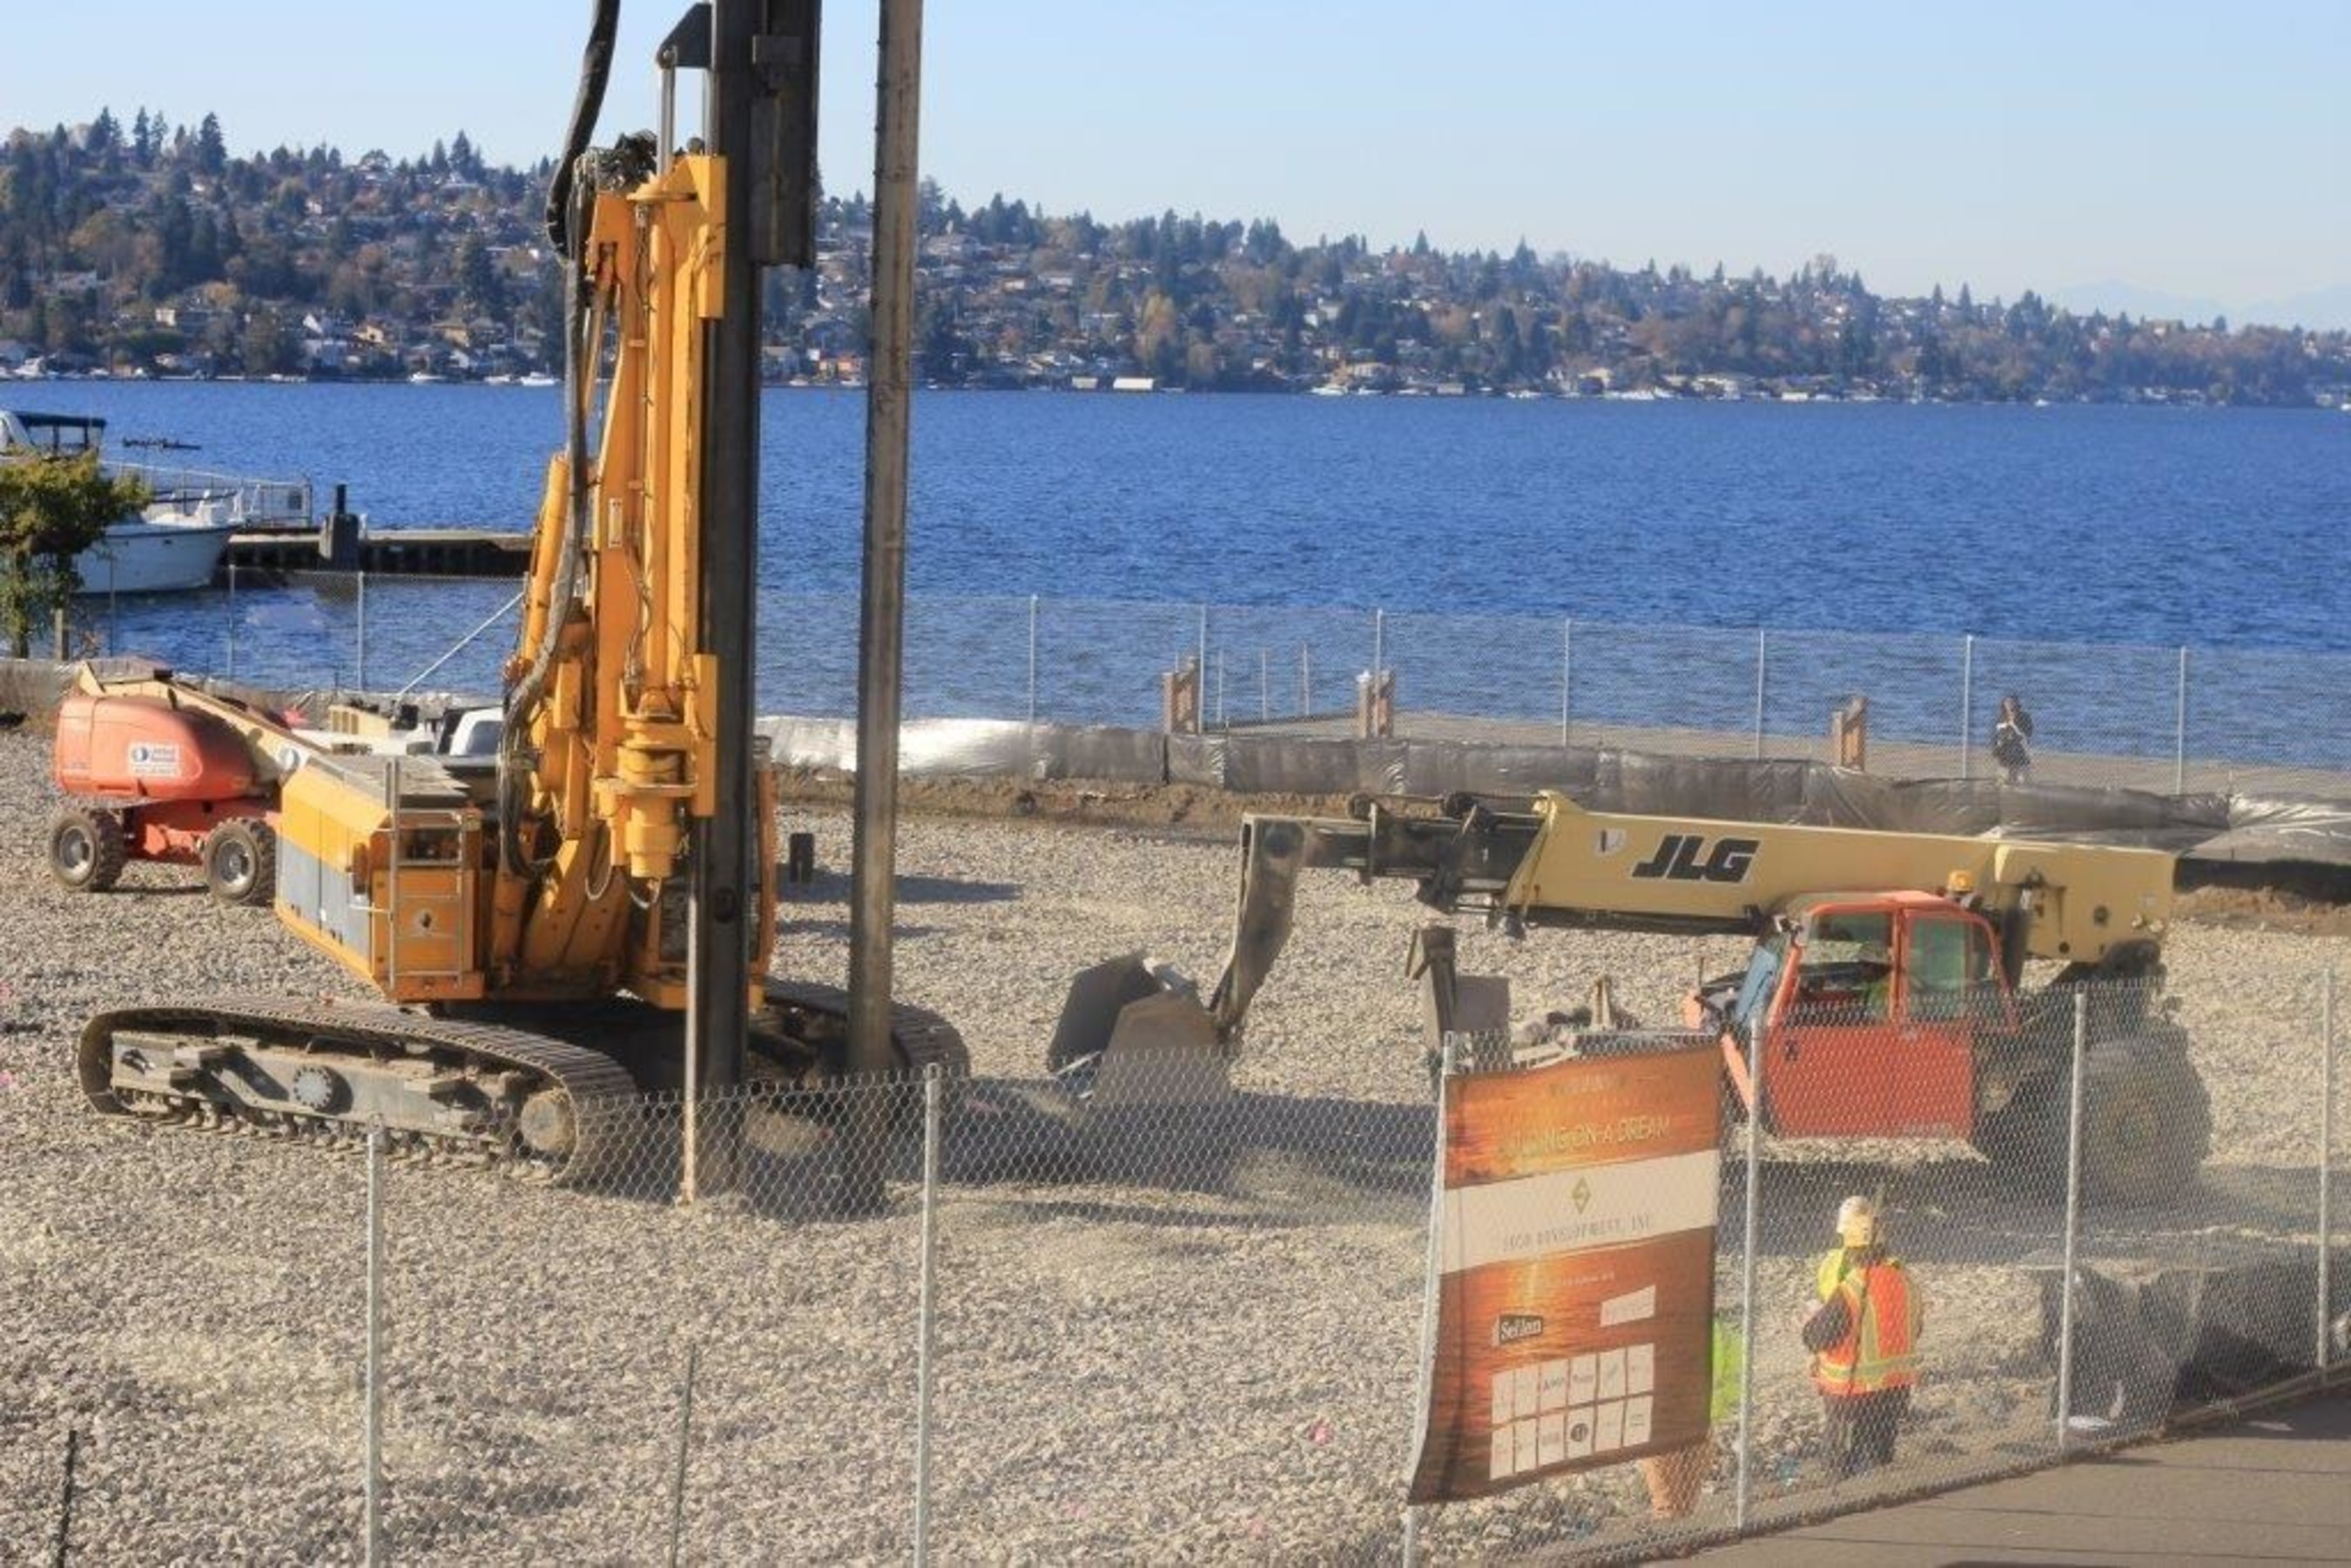 SECO Development's Hotel at Southport on Lake Washington under construction.